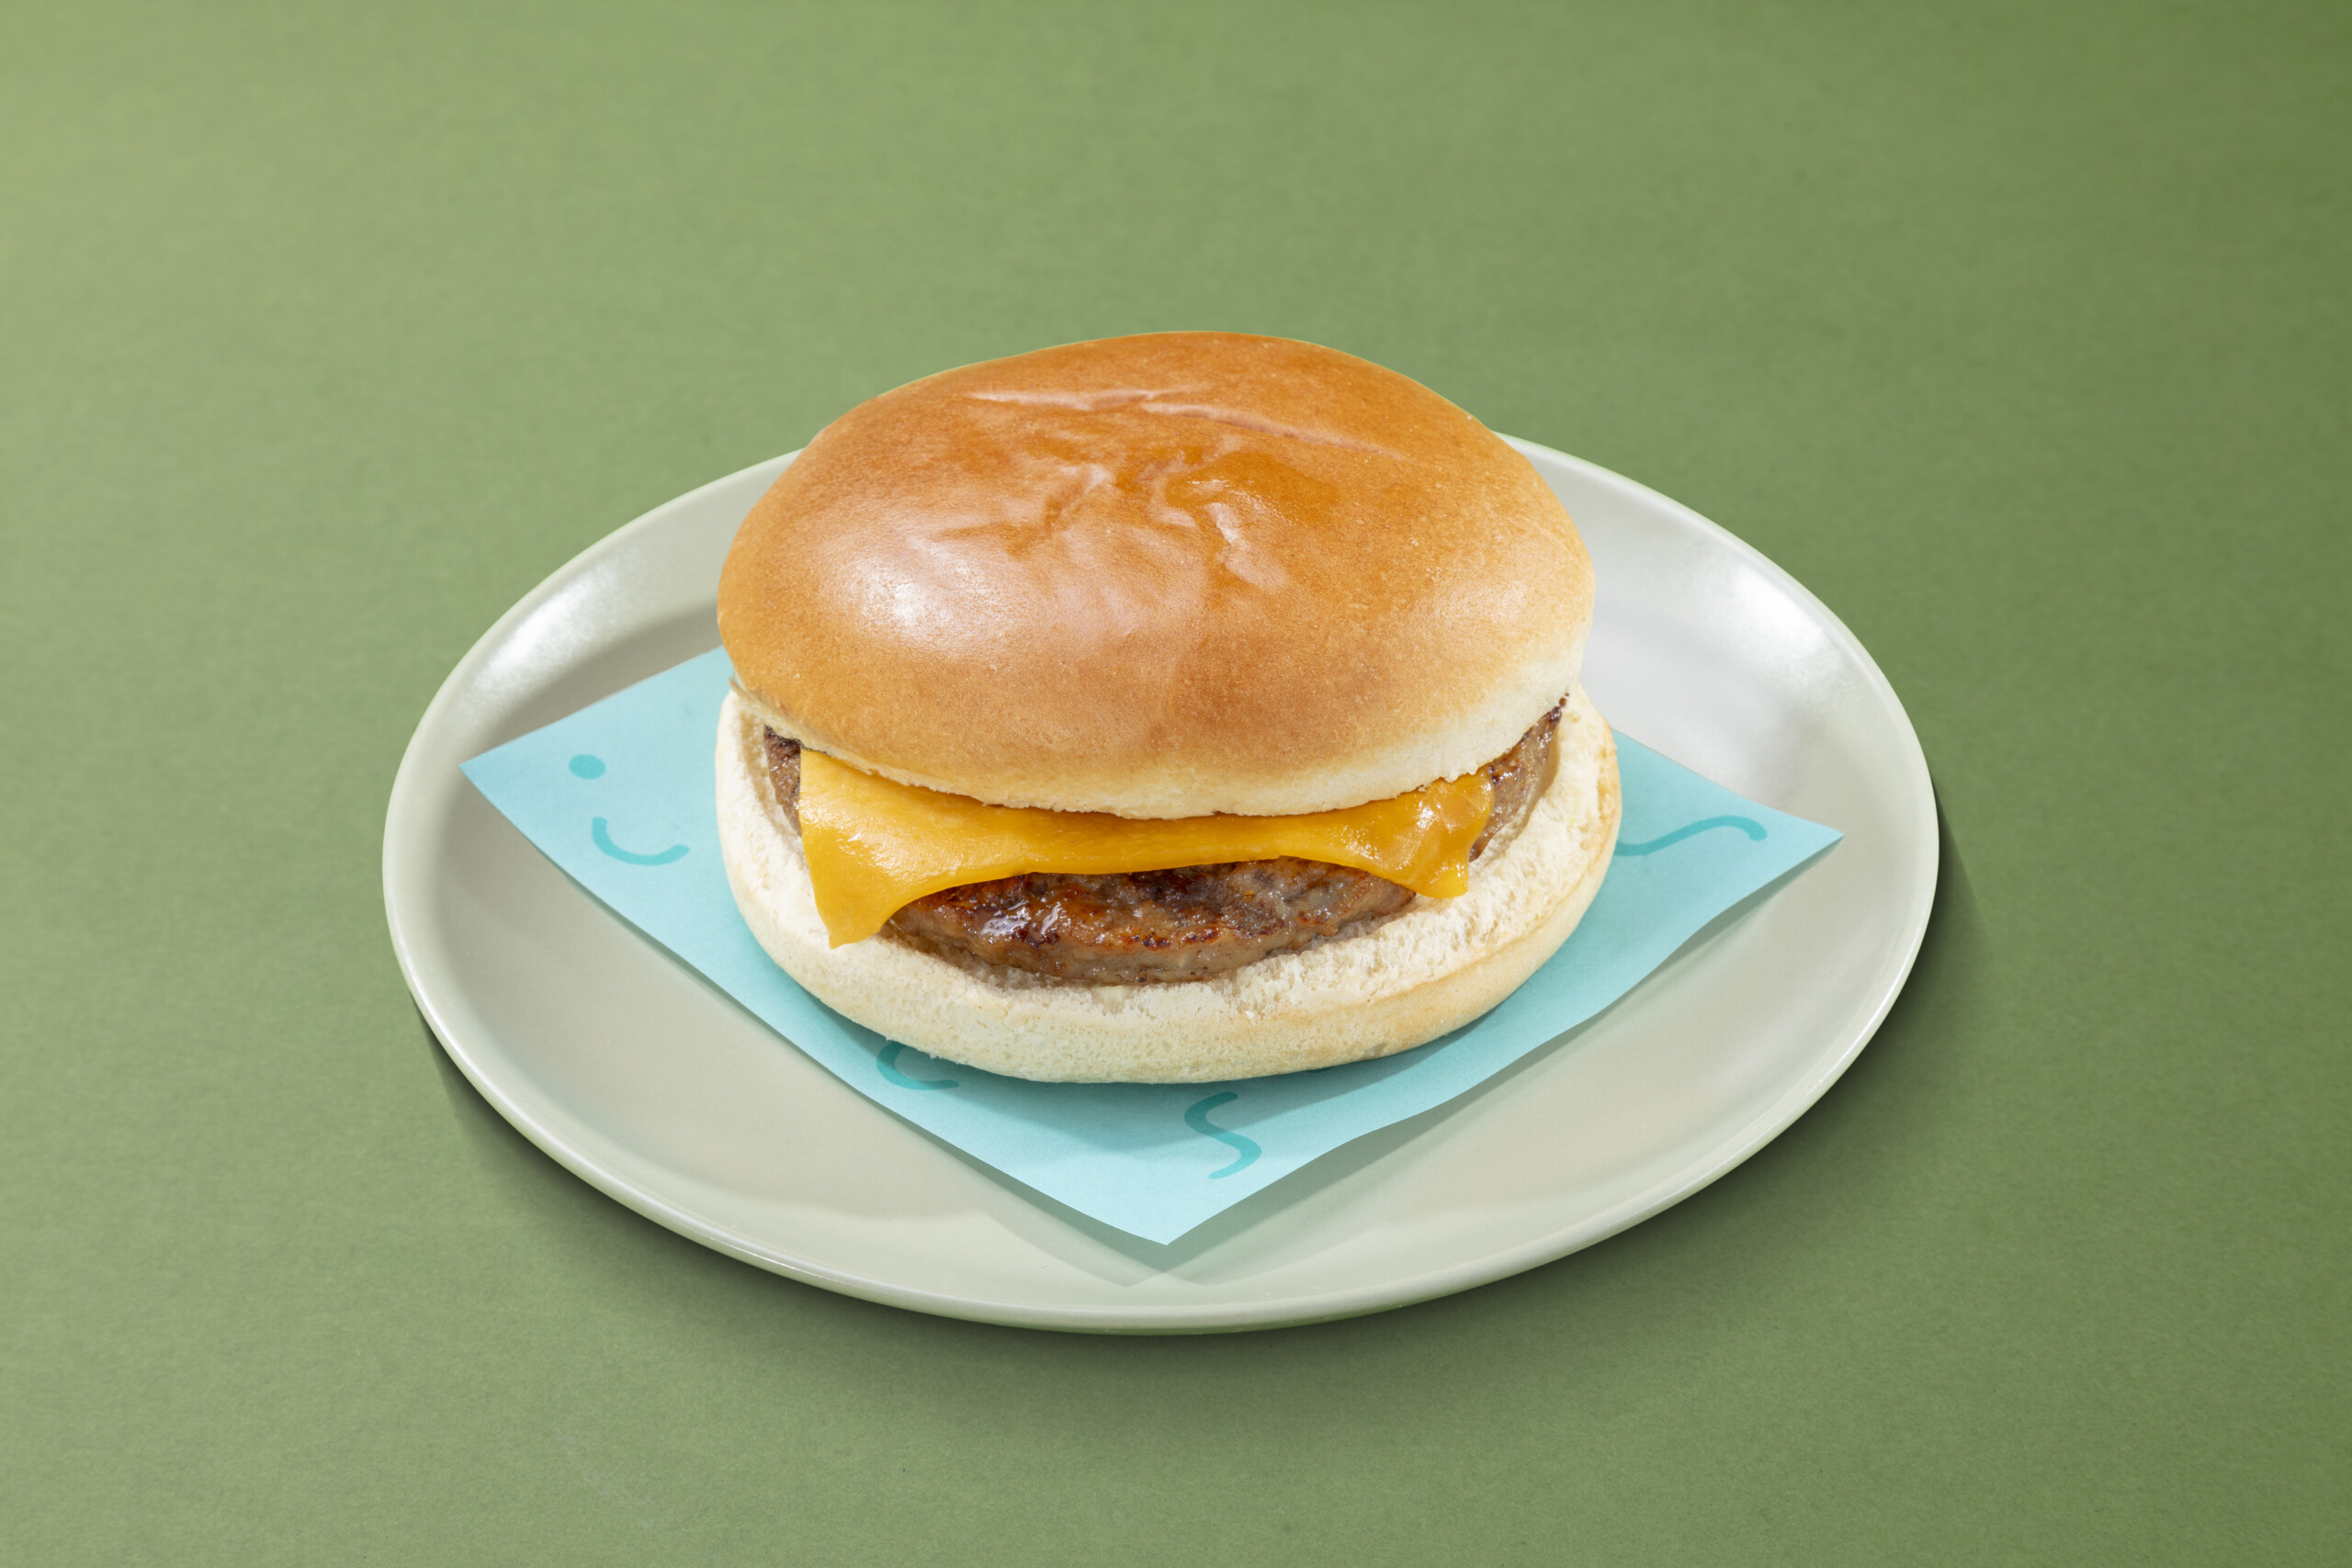 a single cheeseburger in a brioche bun